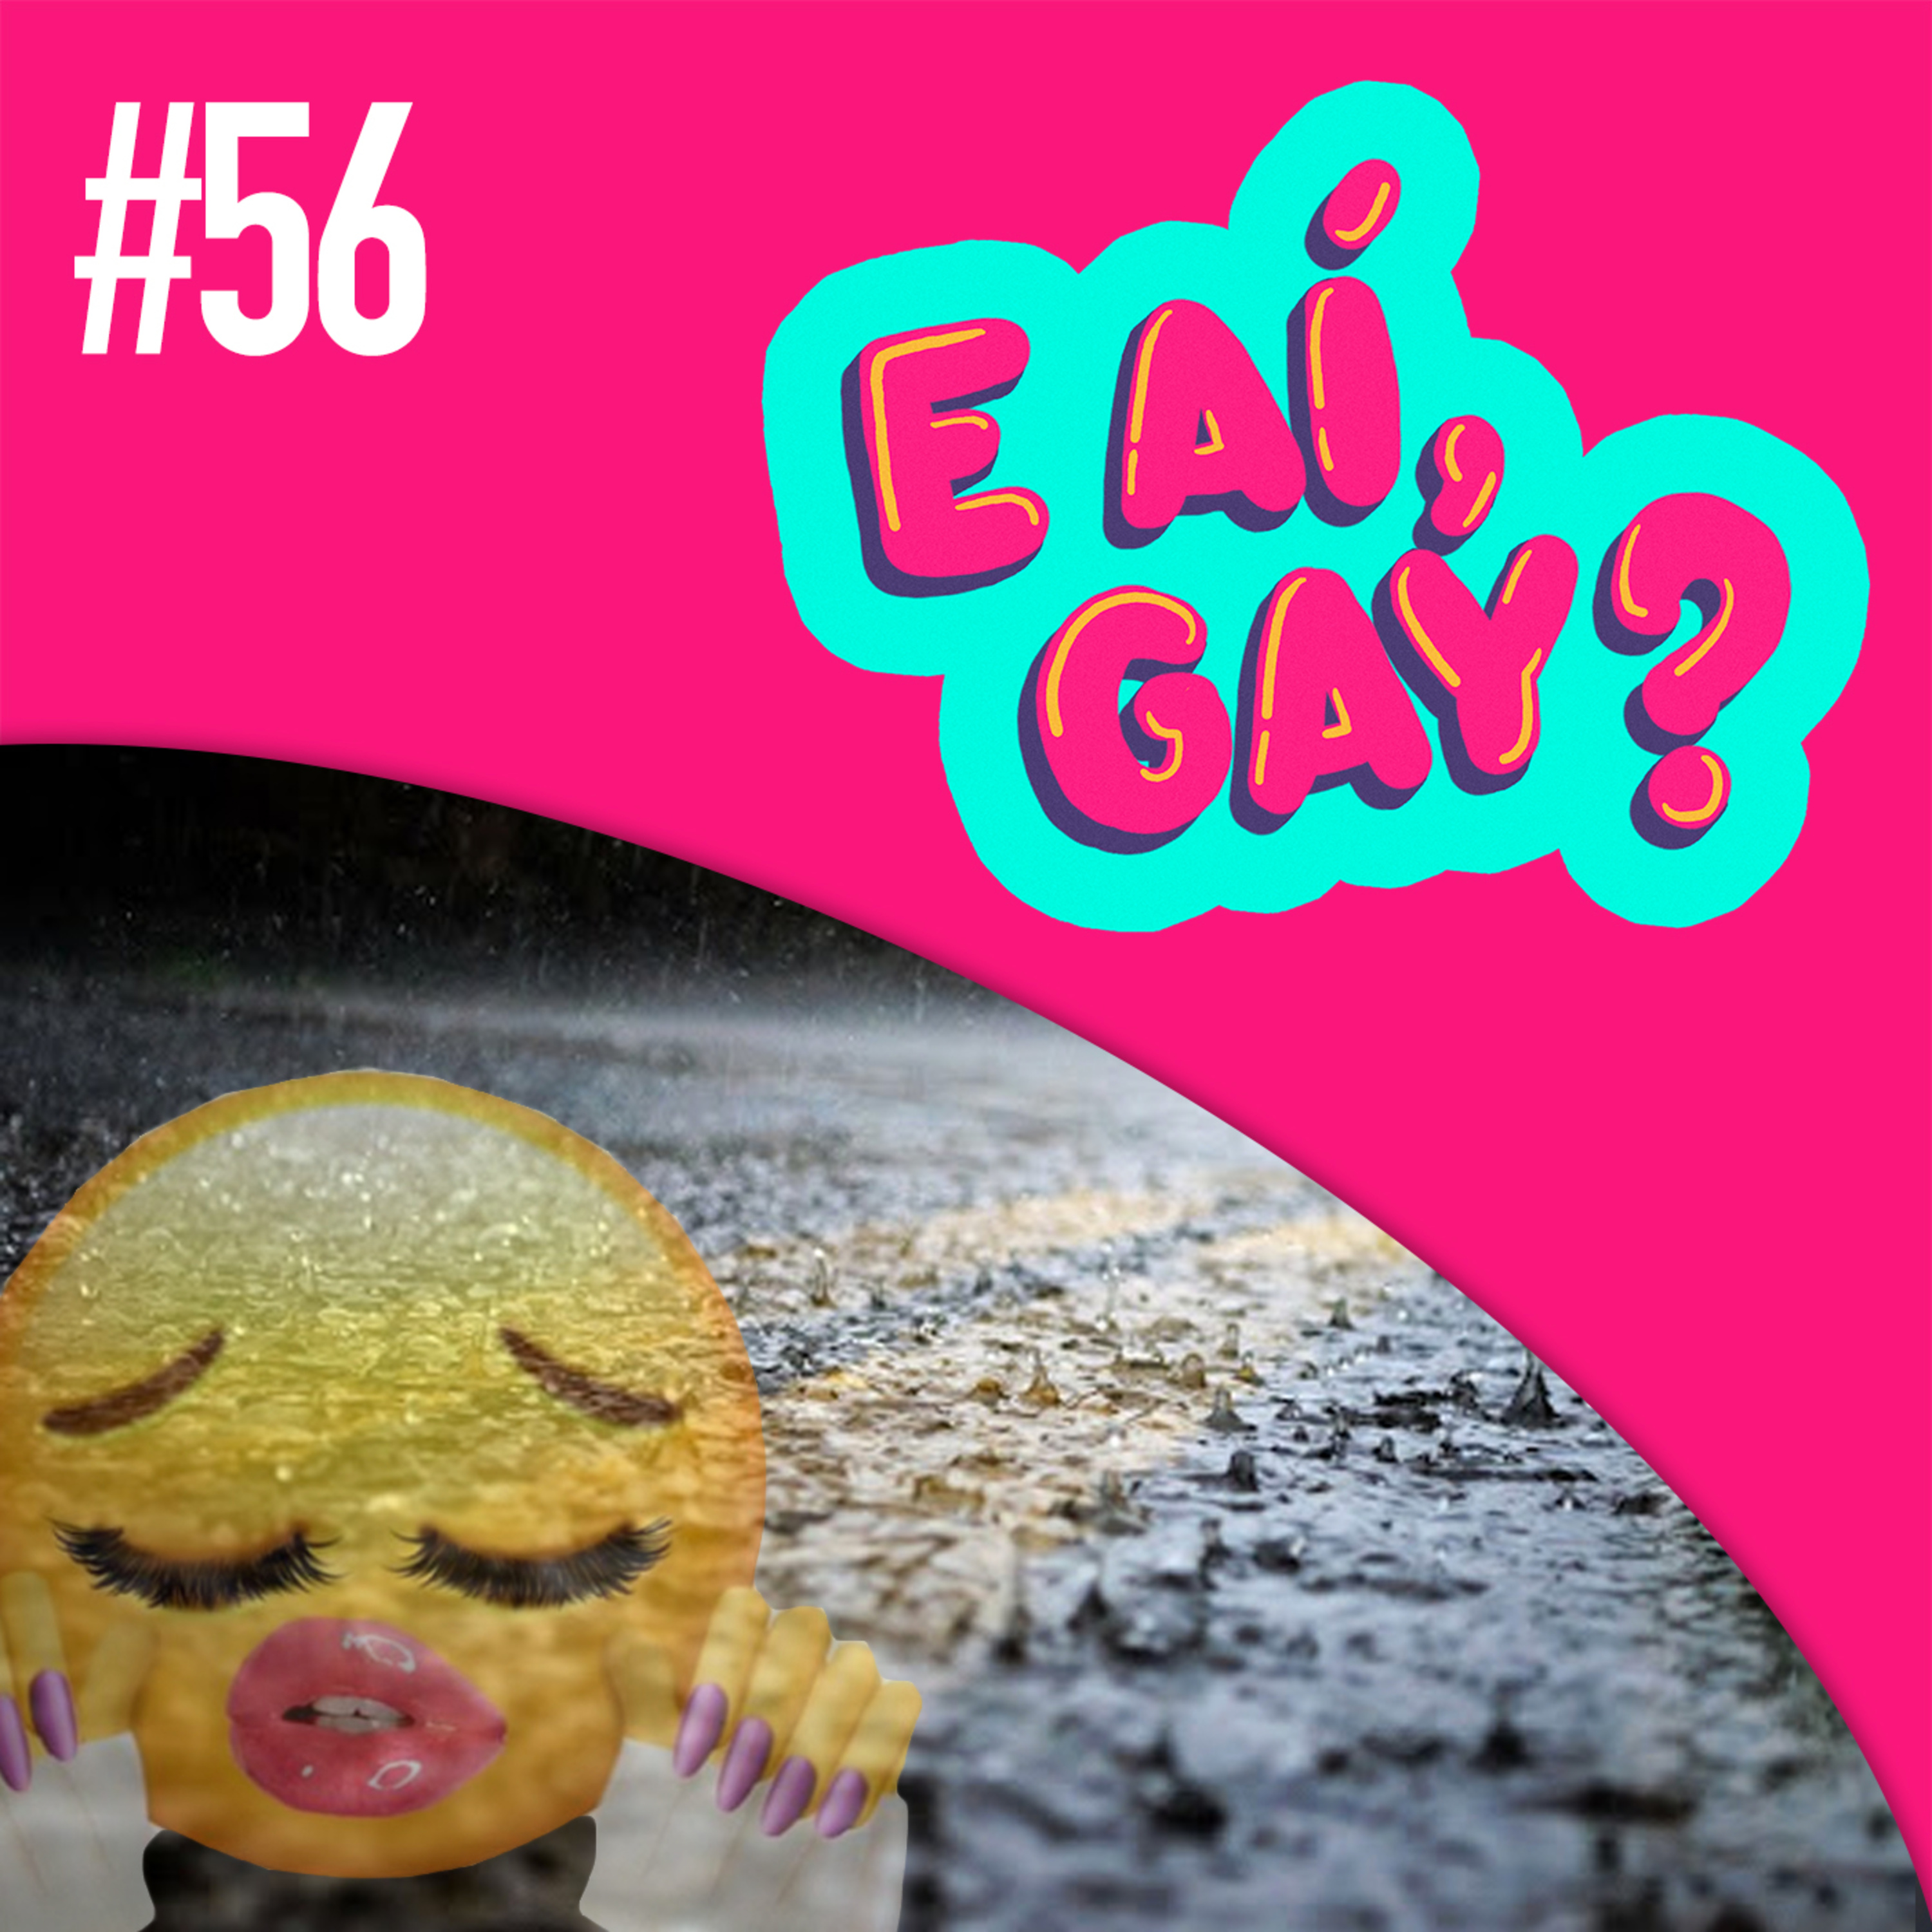 #56 - As passivas deixadas na chuva